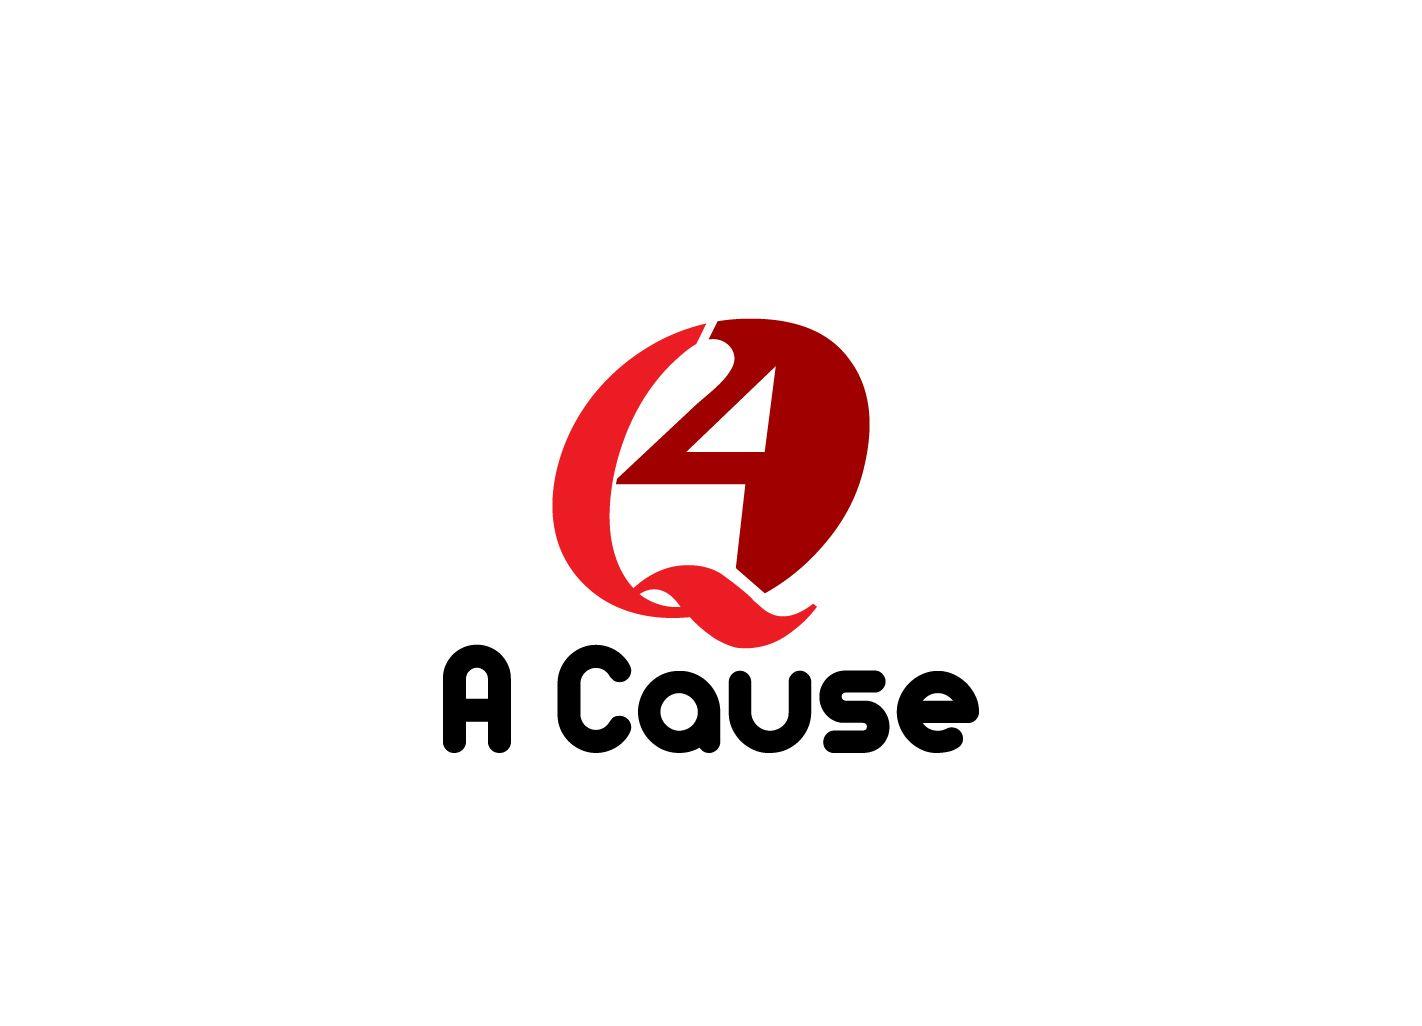 Q Restaurant Logo - Bold, Playful, Restaurant Logo Design for Q 4 A Cause by hih7 ...